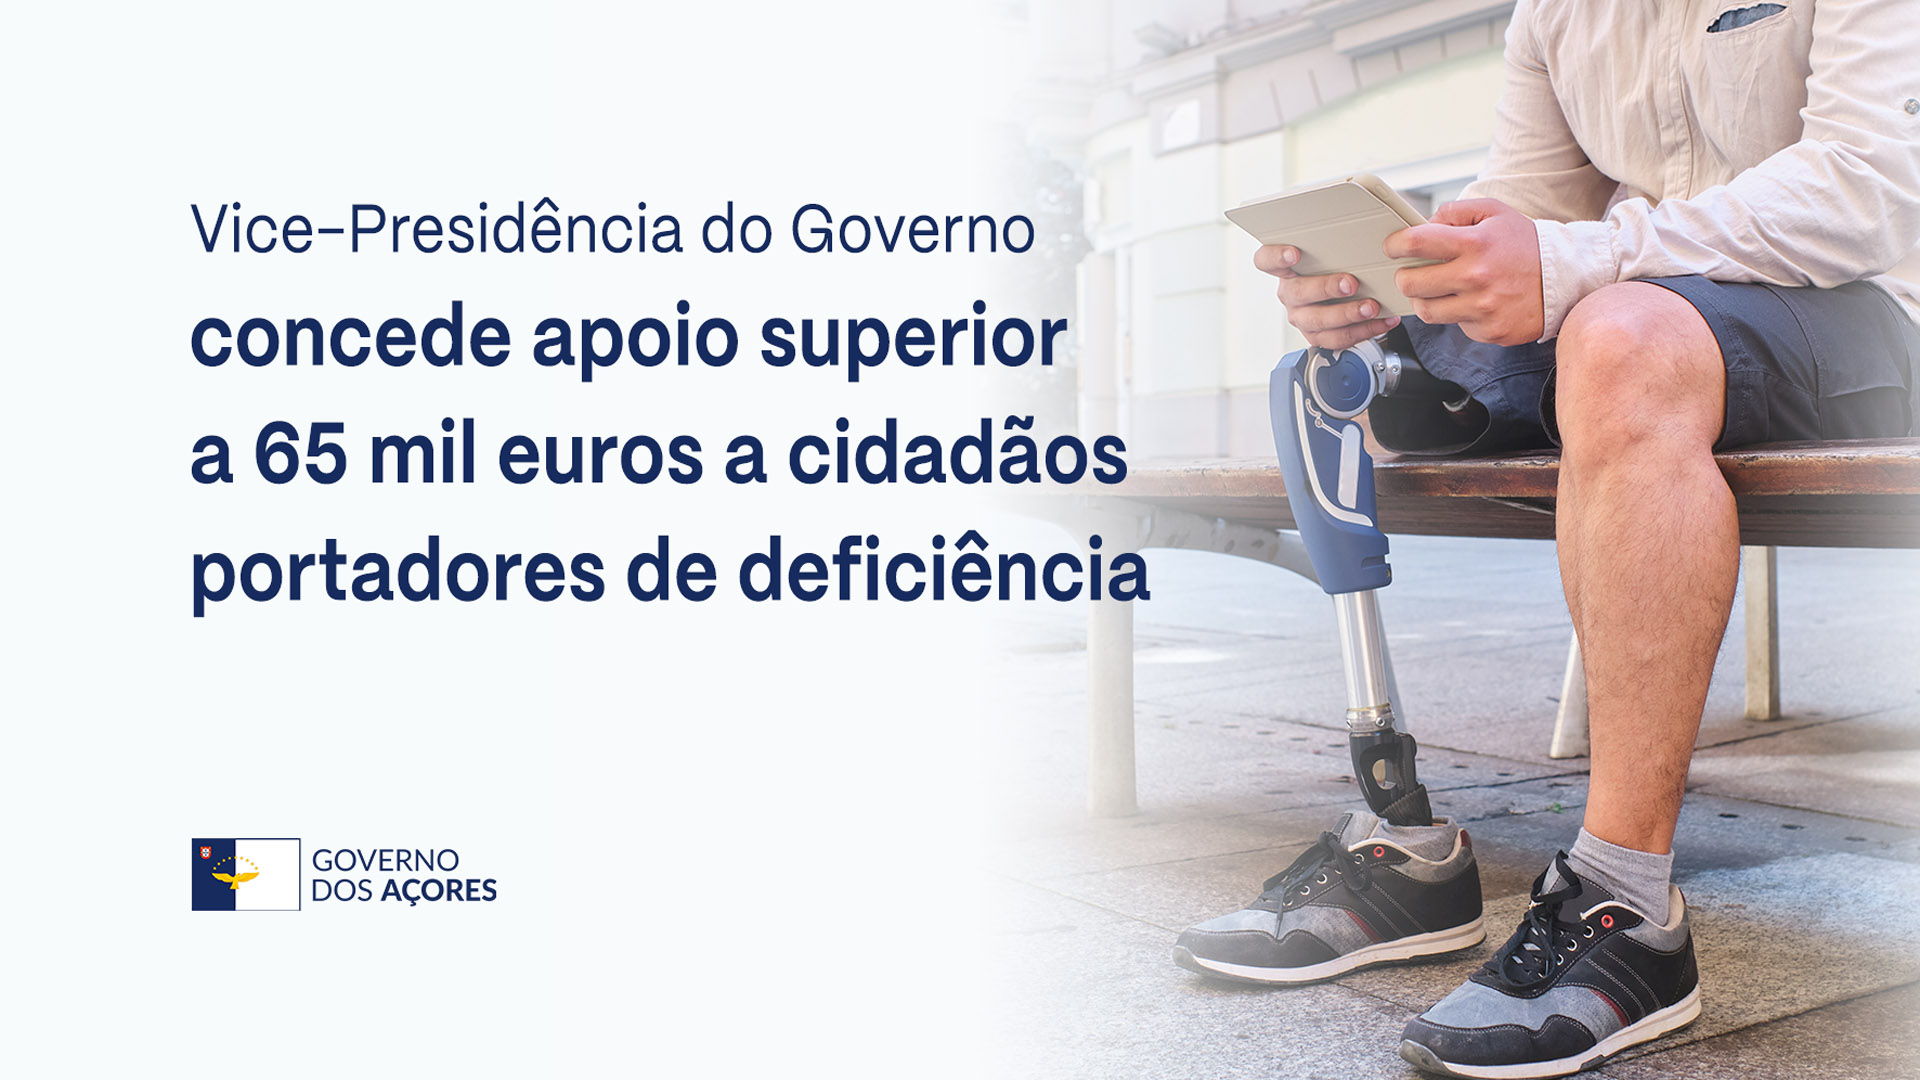 Vice-Presidência do Governo concede apoio superior a 65 mil euros a cidadãos portadores de deficiência